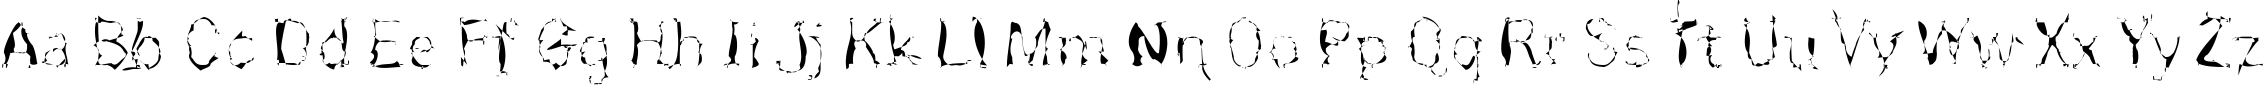 Пример написания английского алфавита шрифтом Rдnnskita